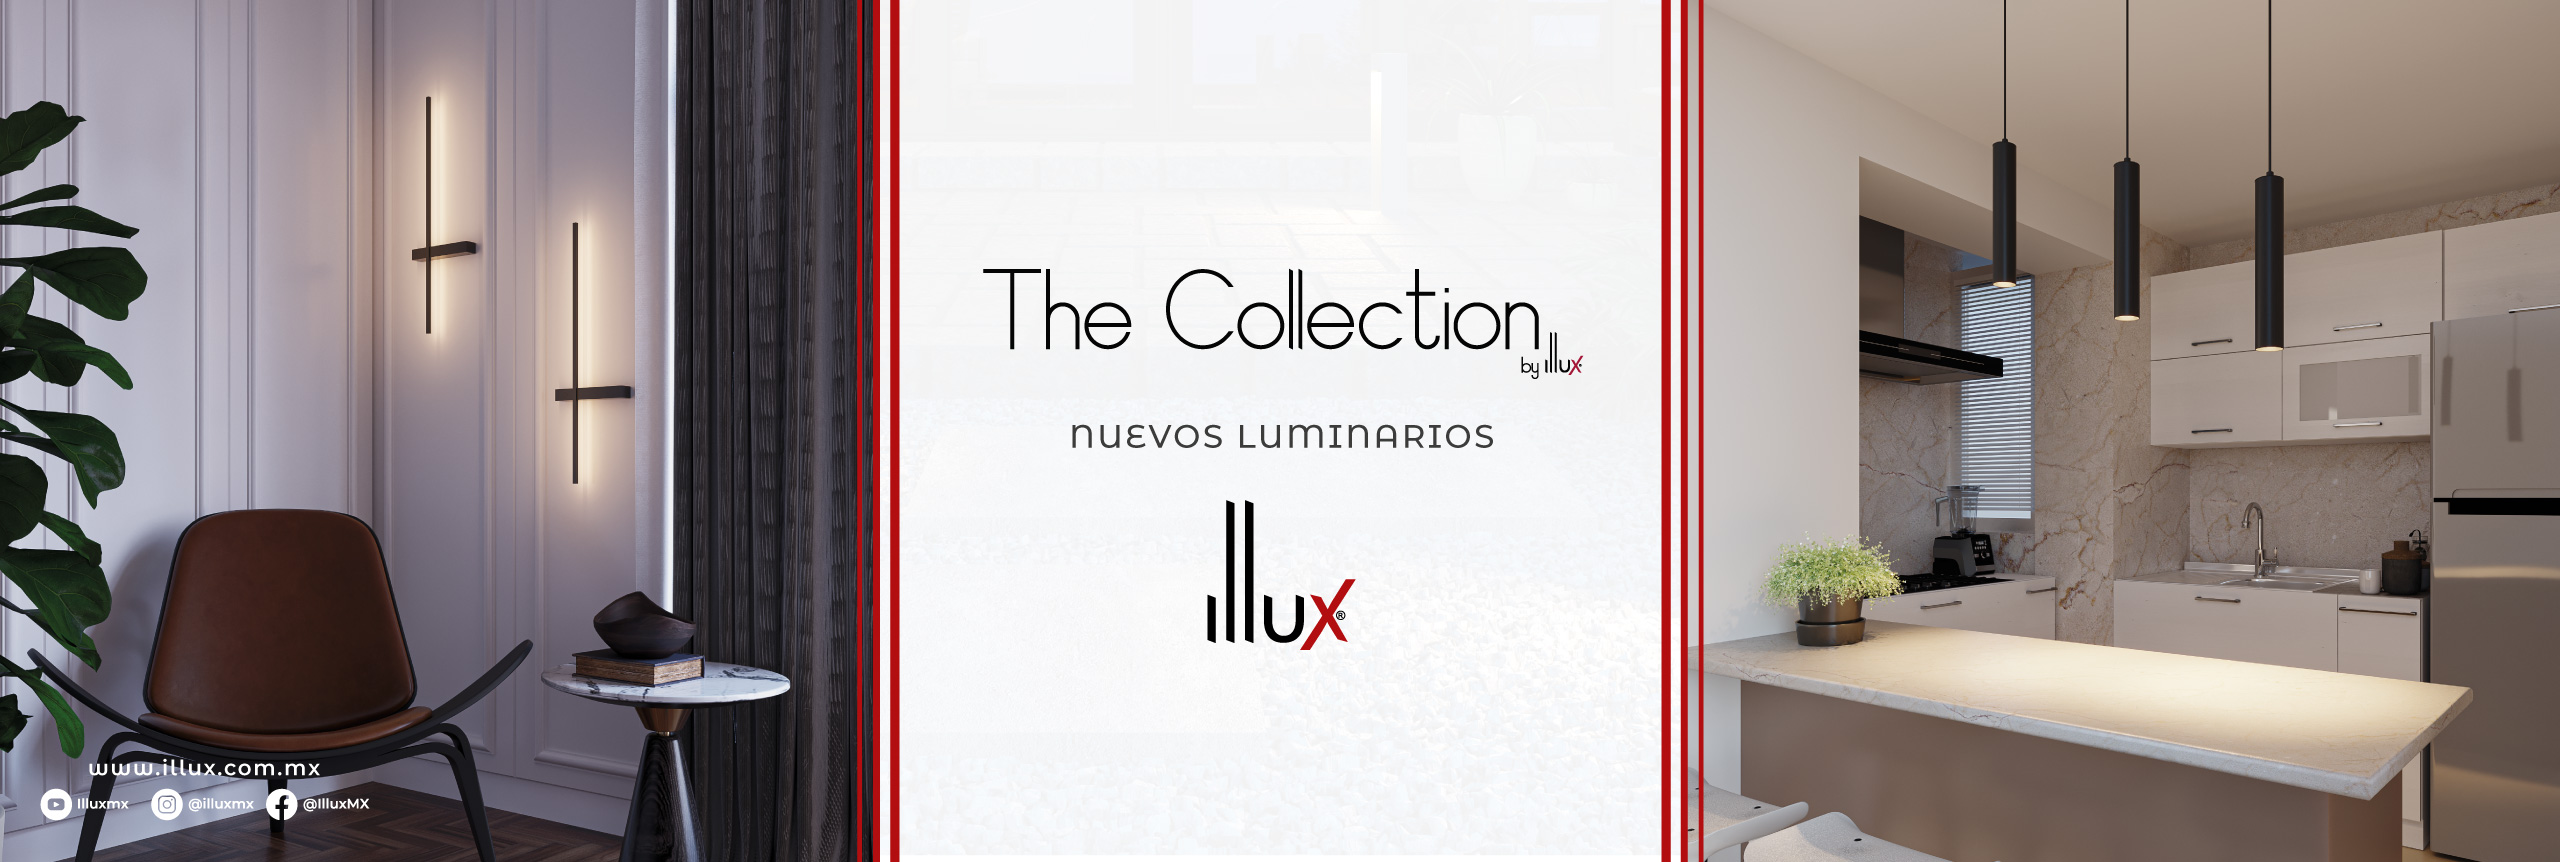 banner-nuevos-productos The collection